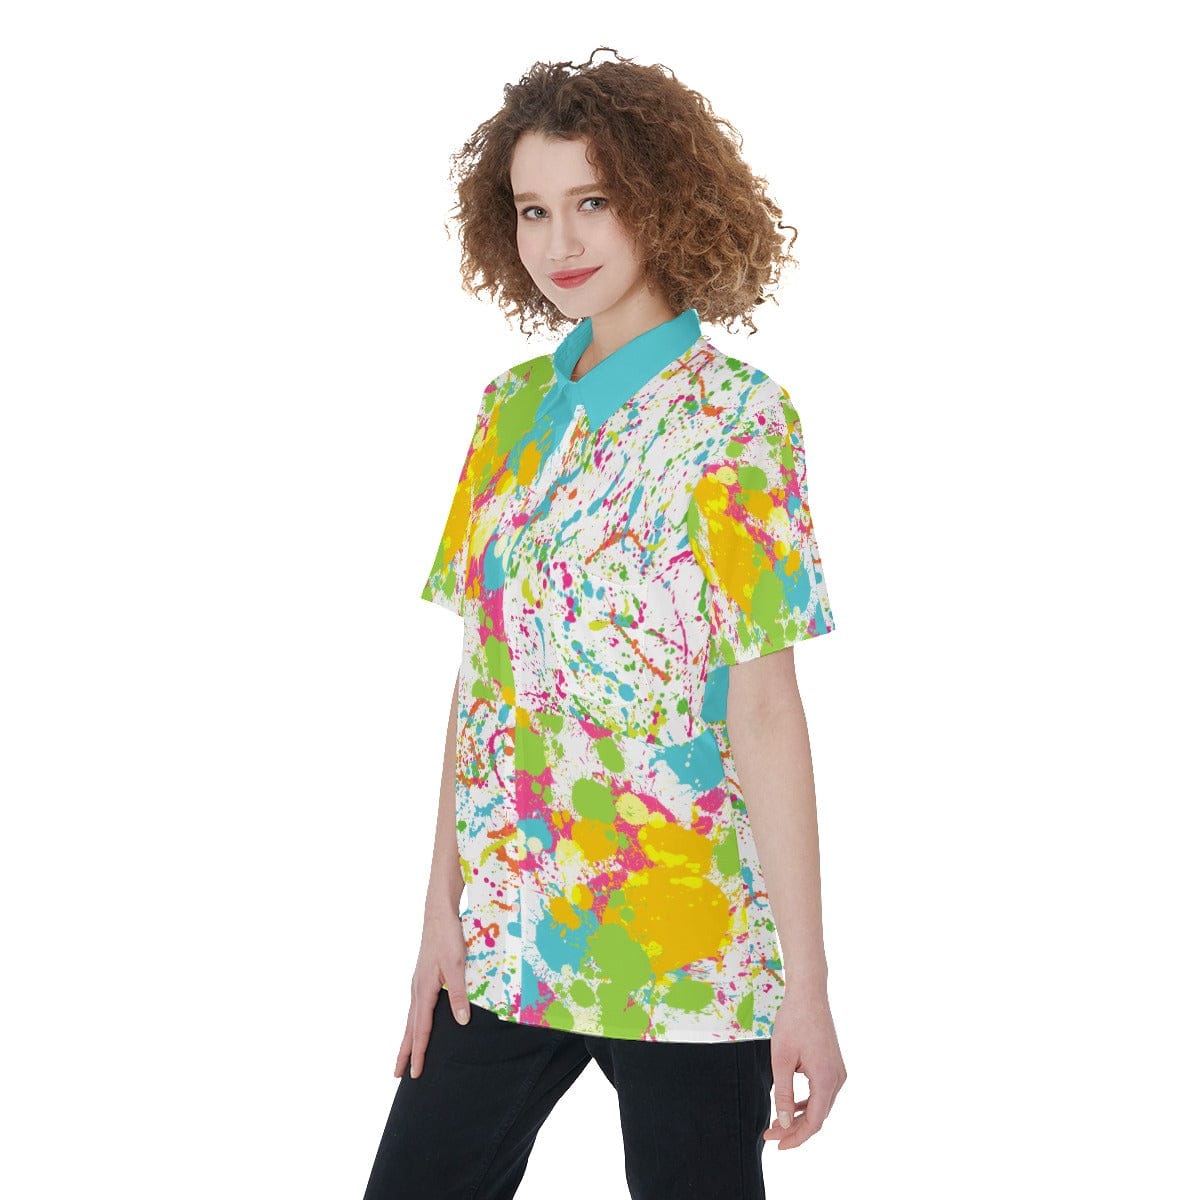 Yoycol Skirt Set Paint Splatter - Women's Short Sleeve Shirt With Pocket